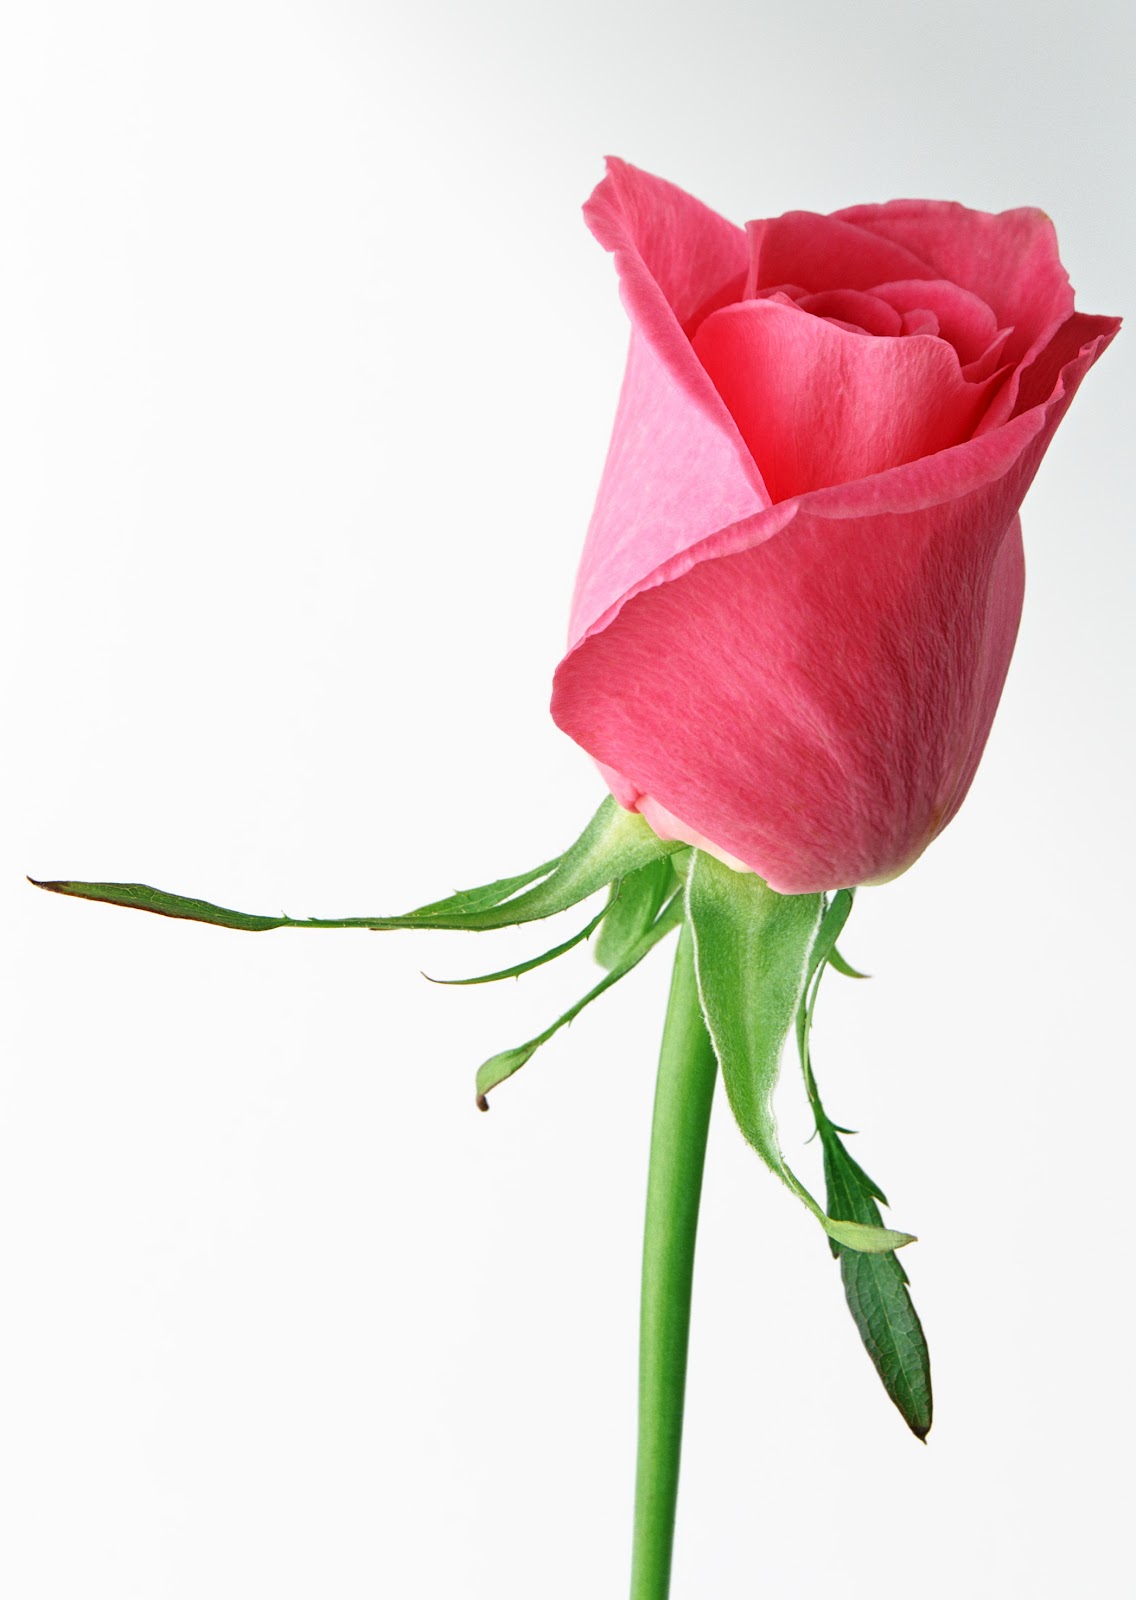 rose clip art free download - photo #27